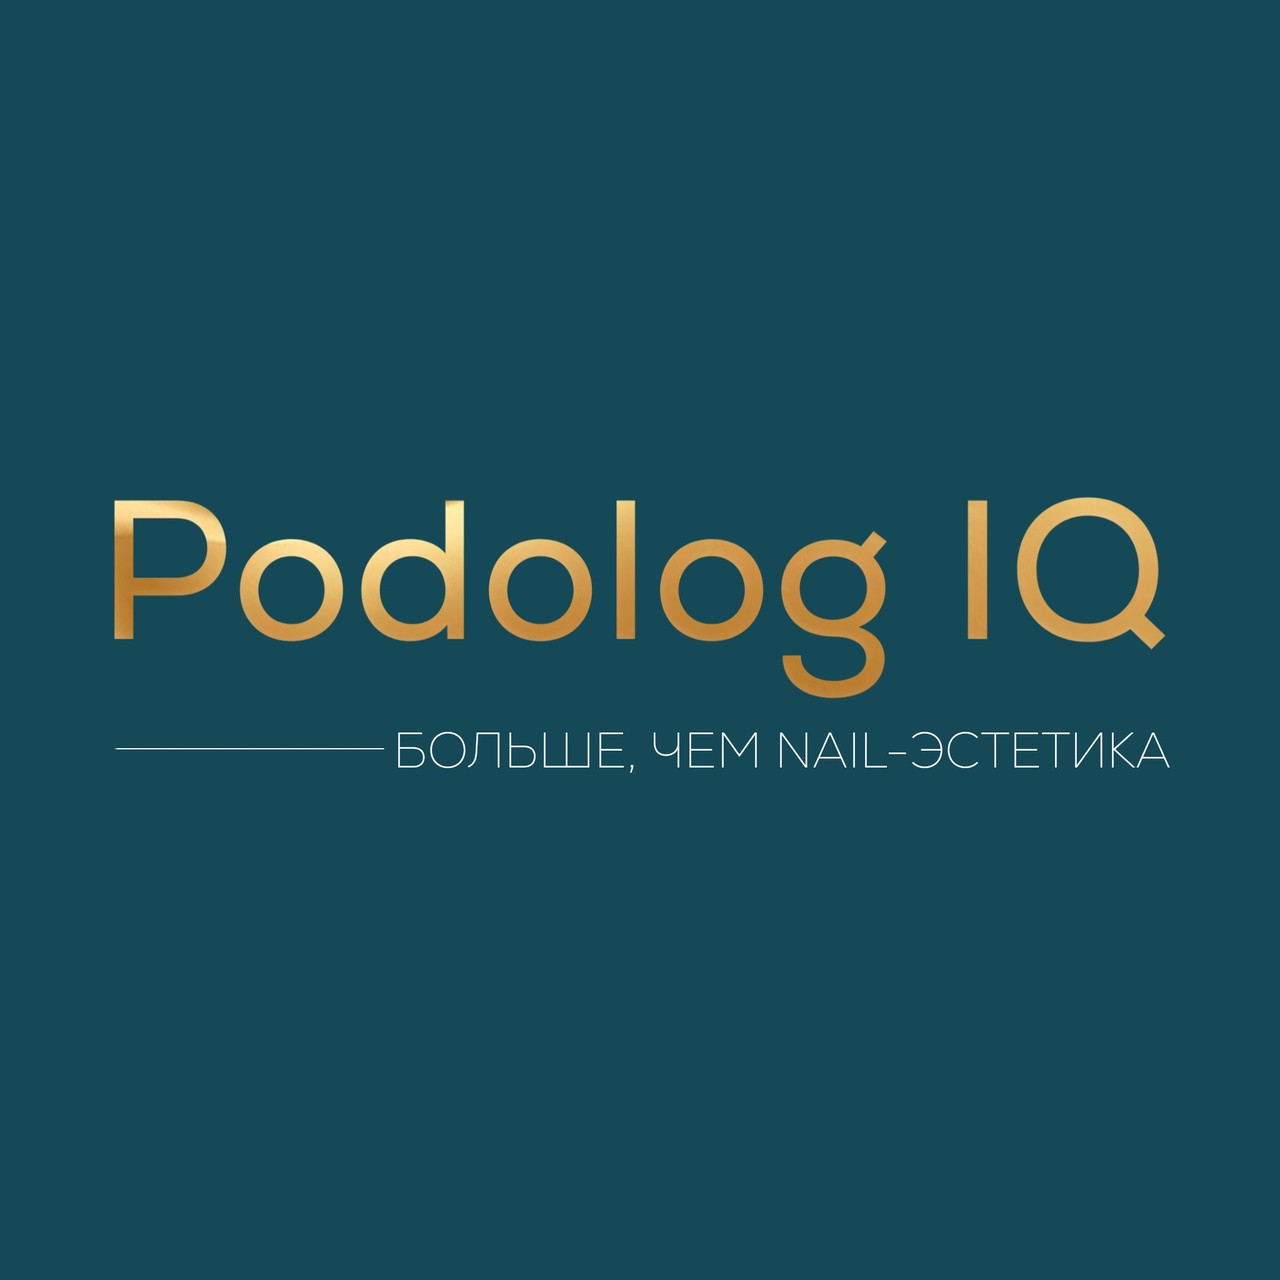 Студия ногтевого сервиса и подологии Podolog IQ